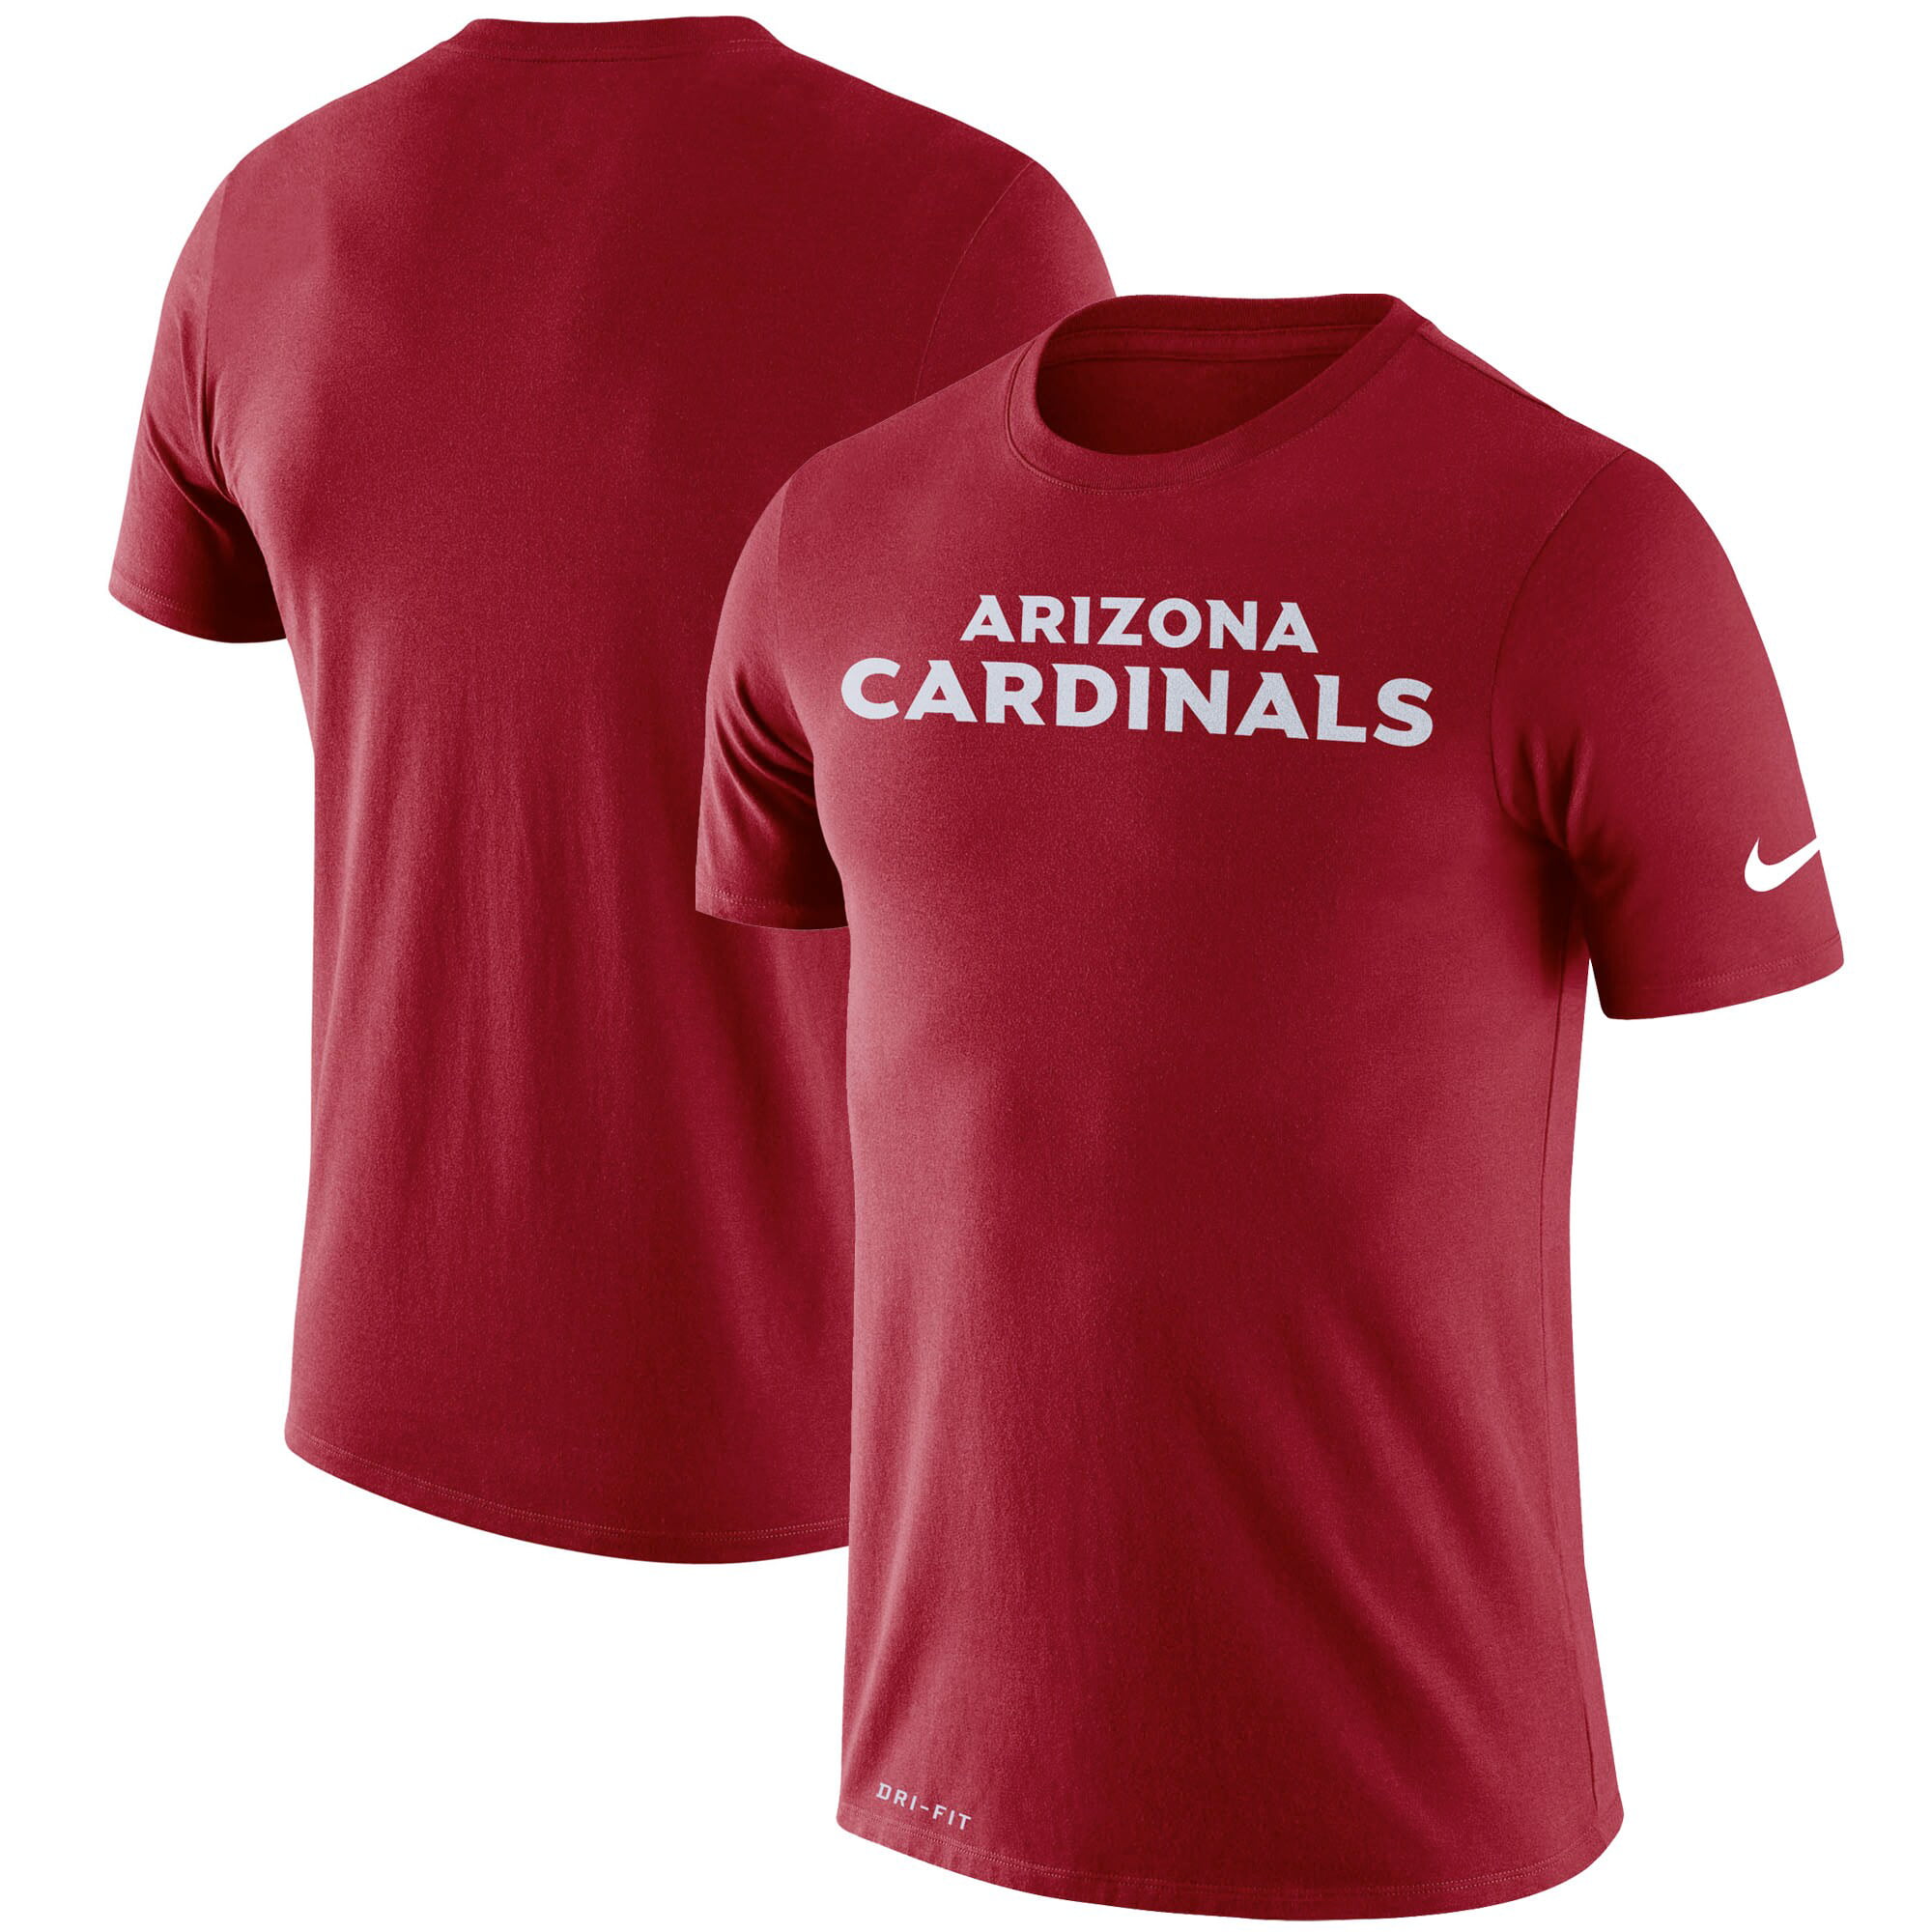 arizona cardinals shirts walmart